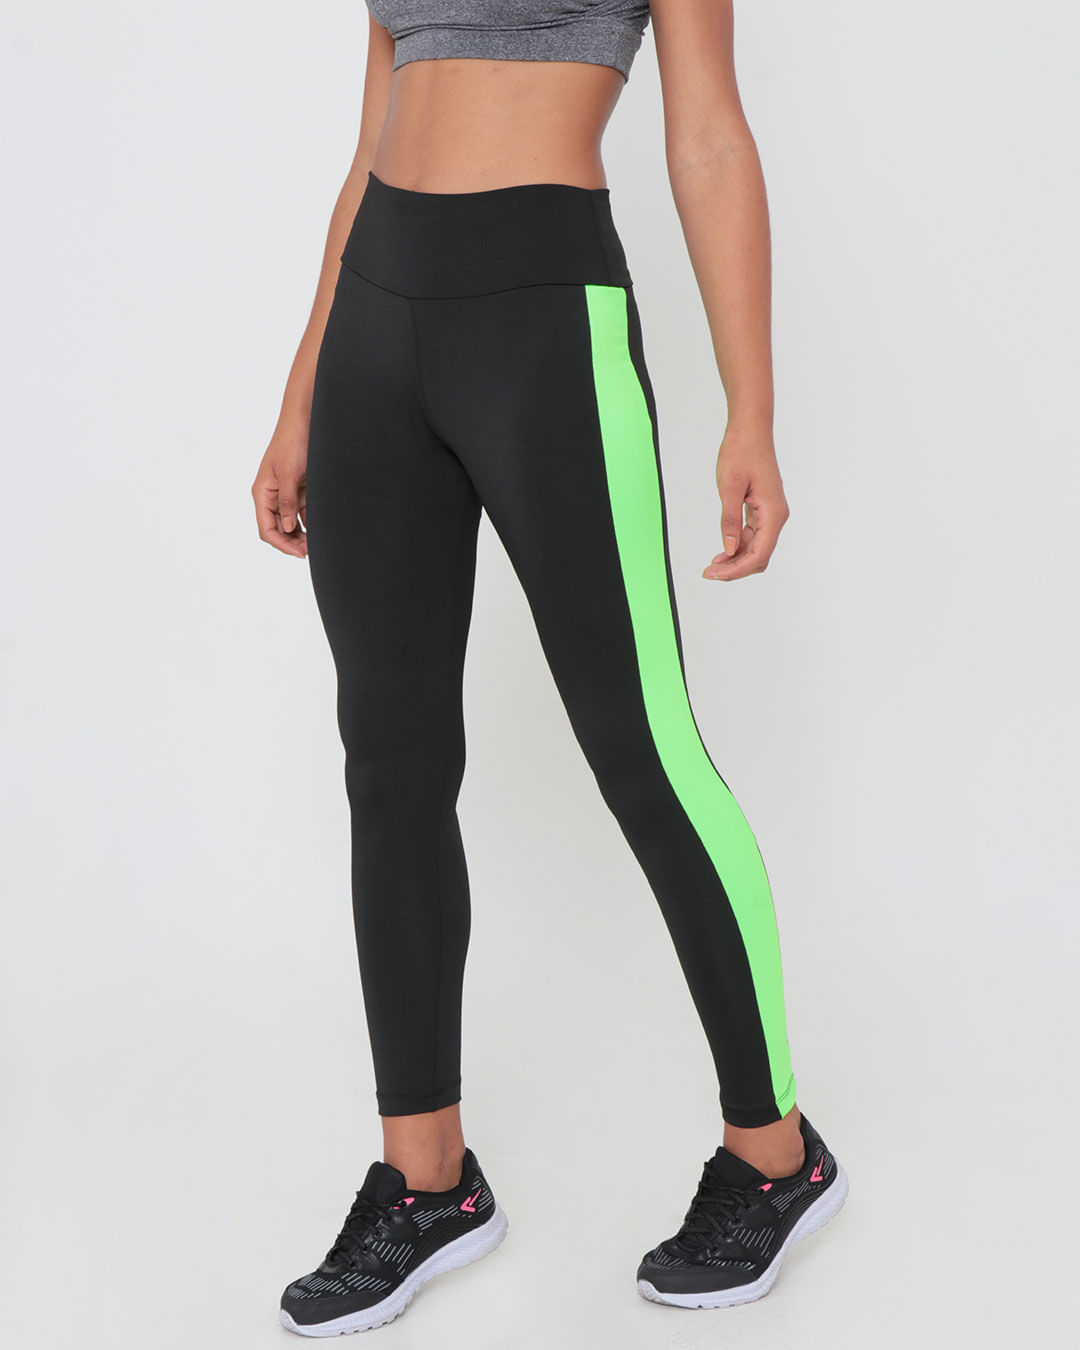 Calca-Legging-Fitness-Recorte-Neon-Verde